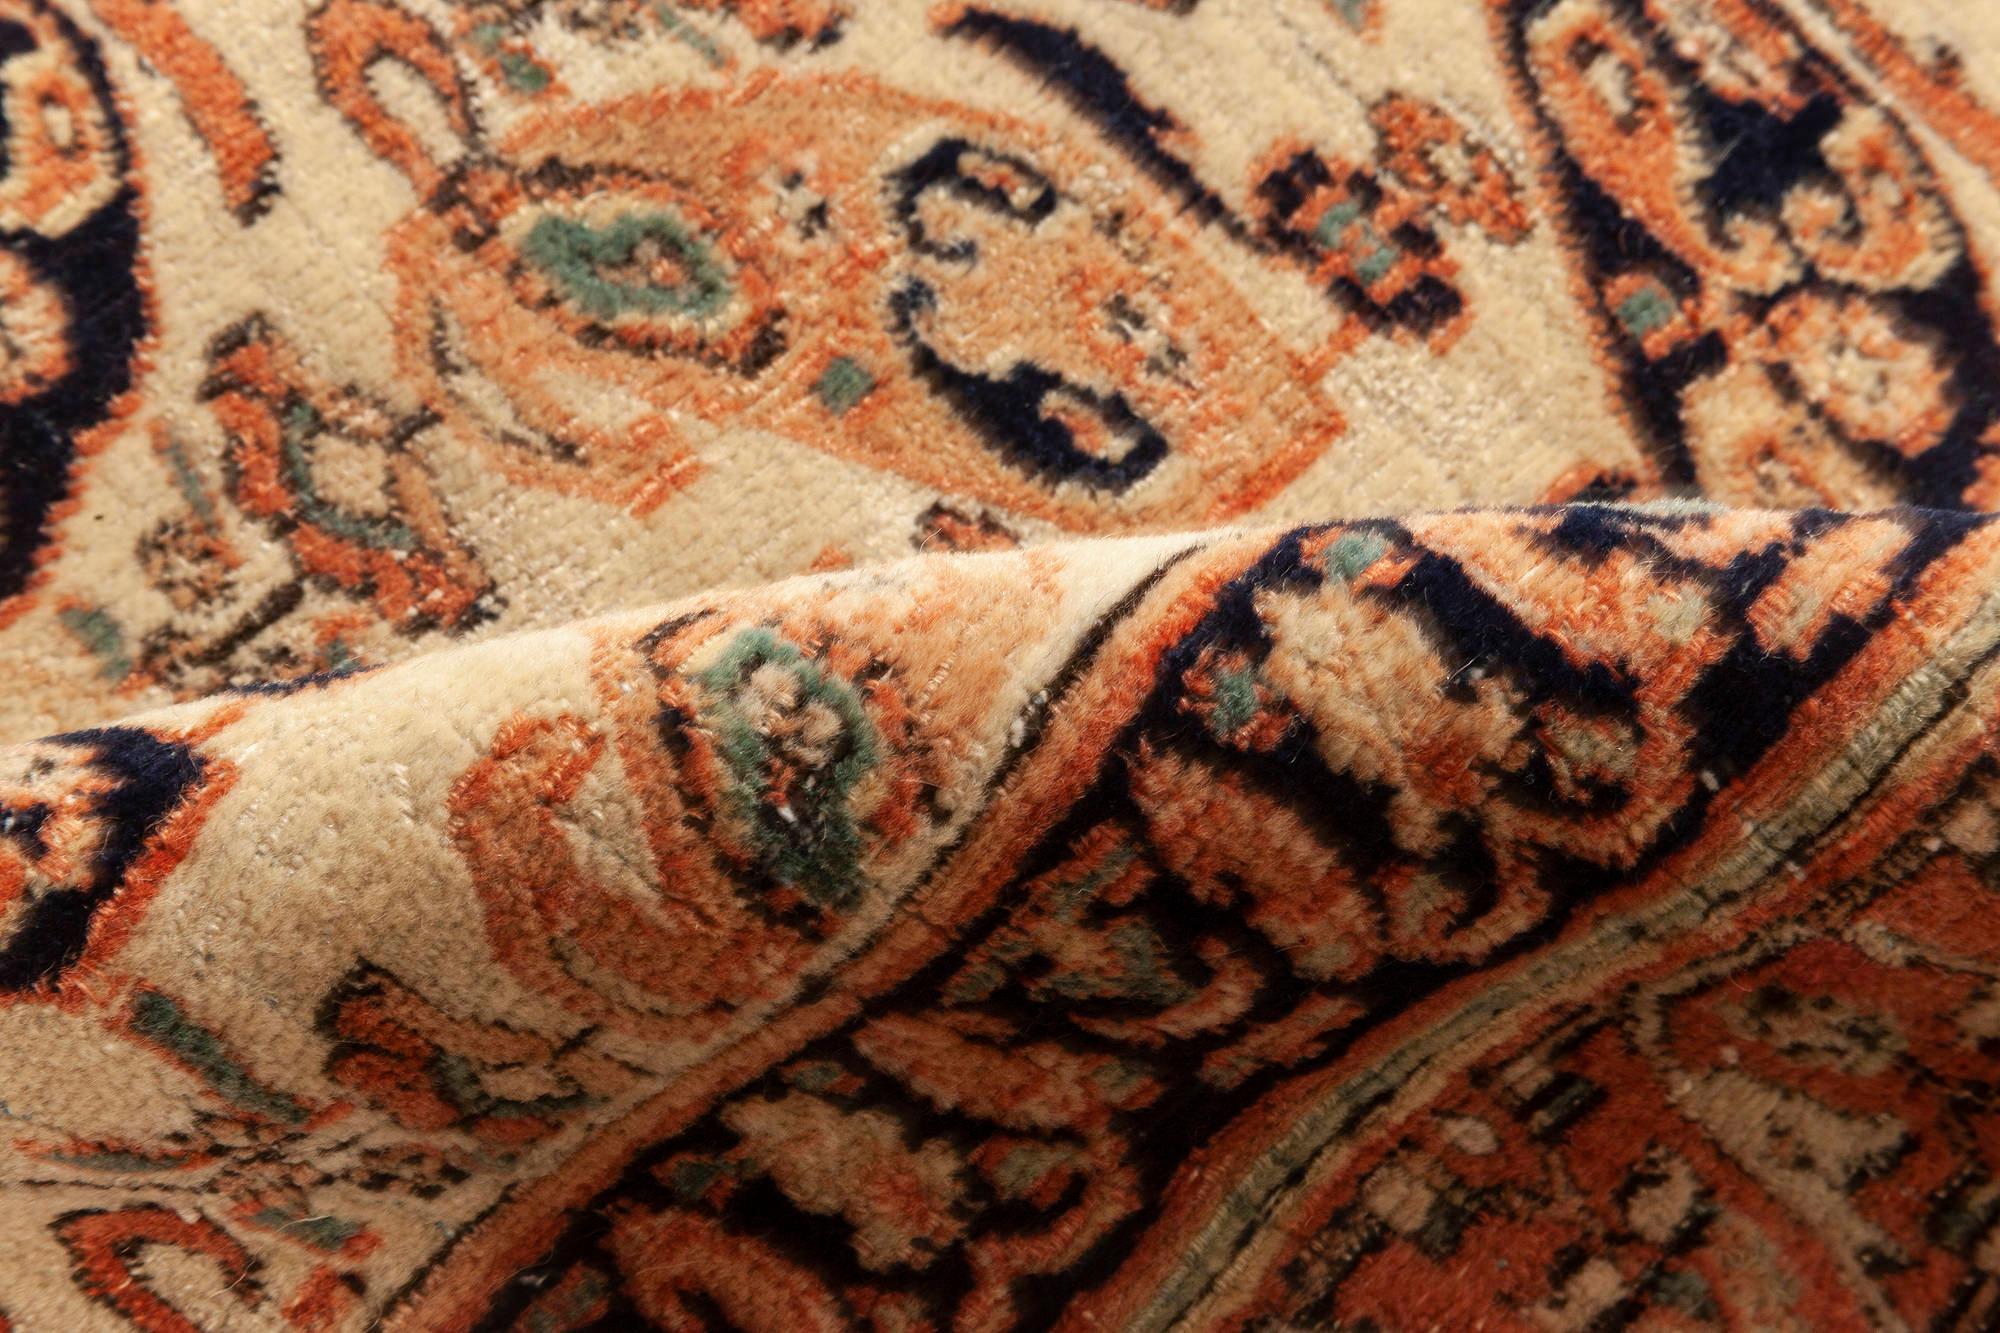 20th century Persian Tabriz handmade wool rug.
Size: 5'0